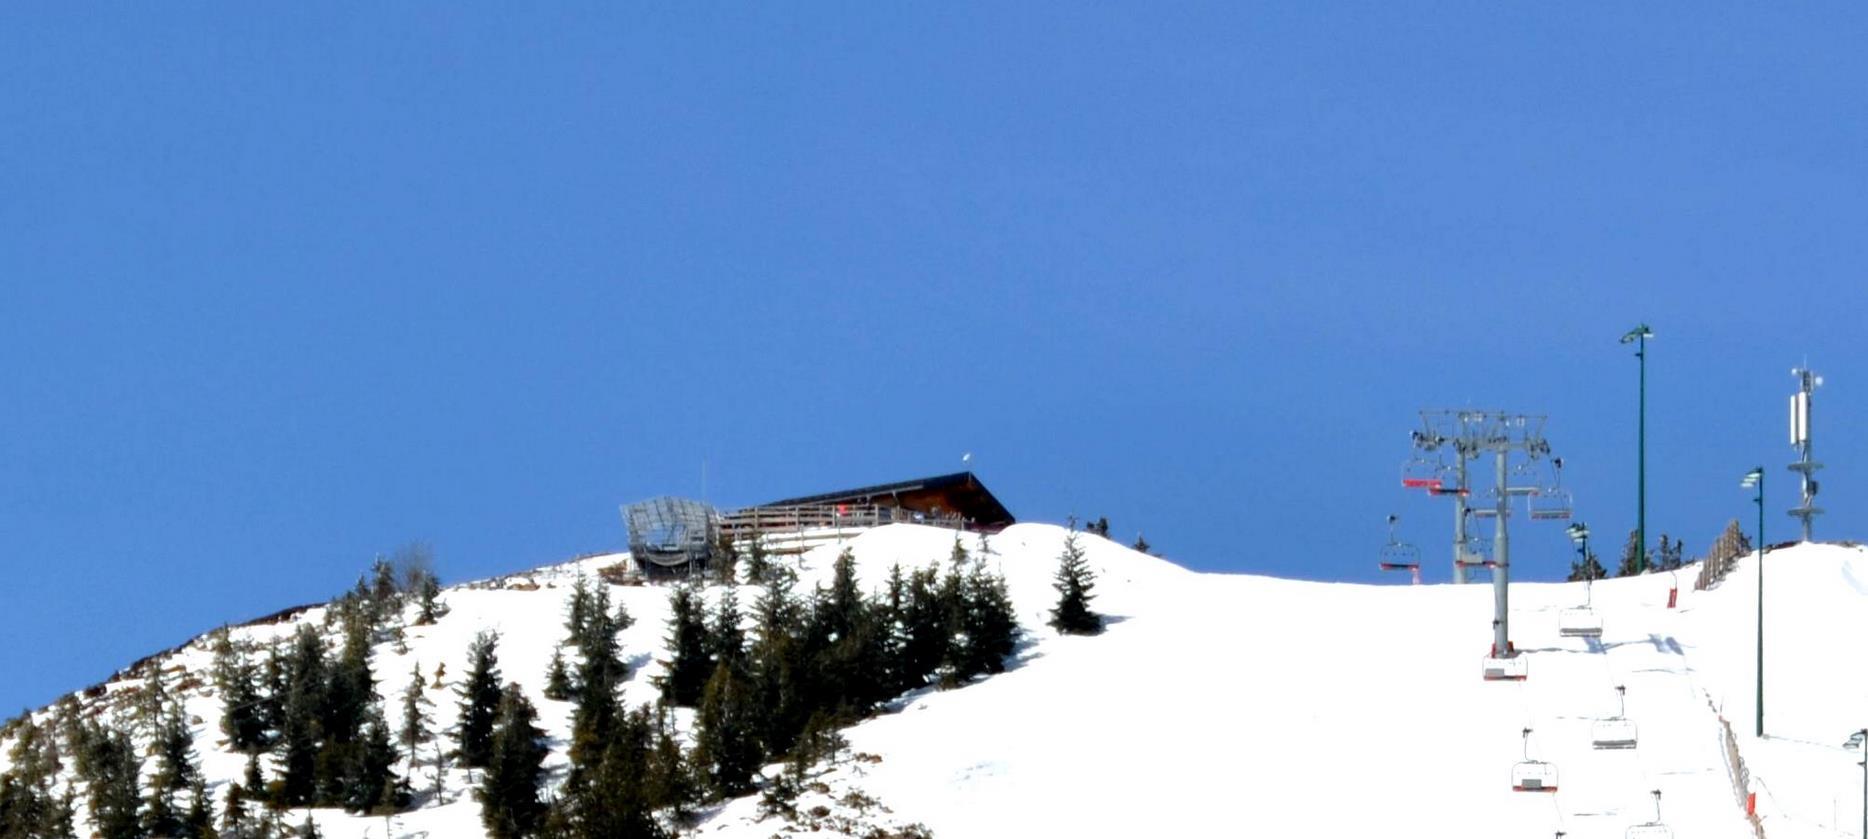 Super Besse - start of the zipline and restaurant on the slopes